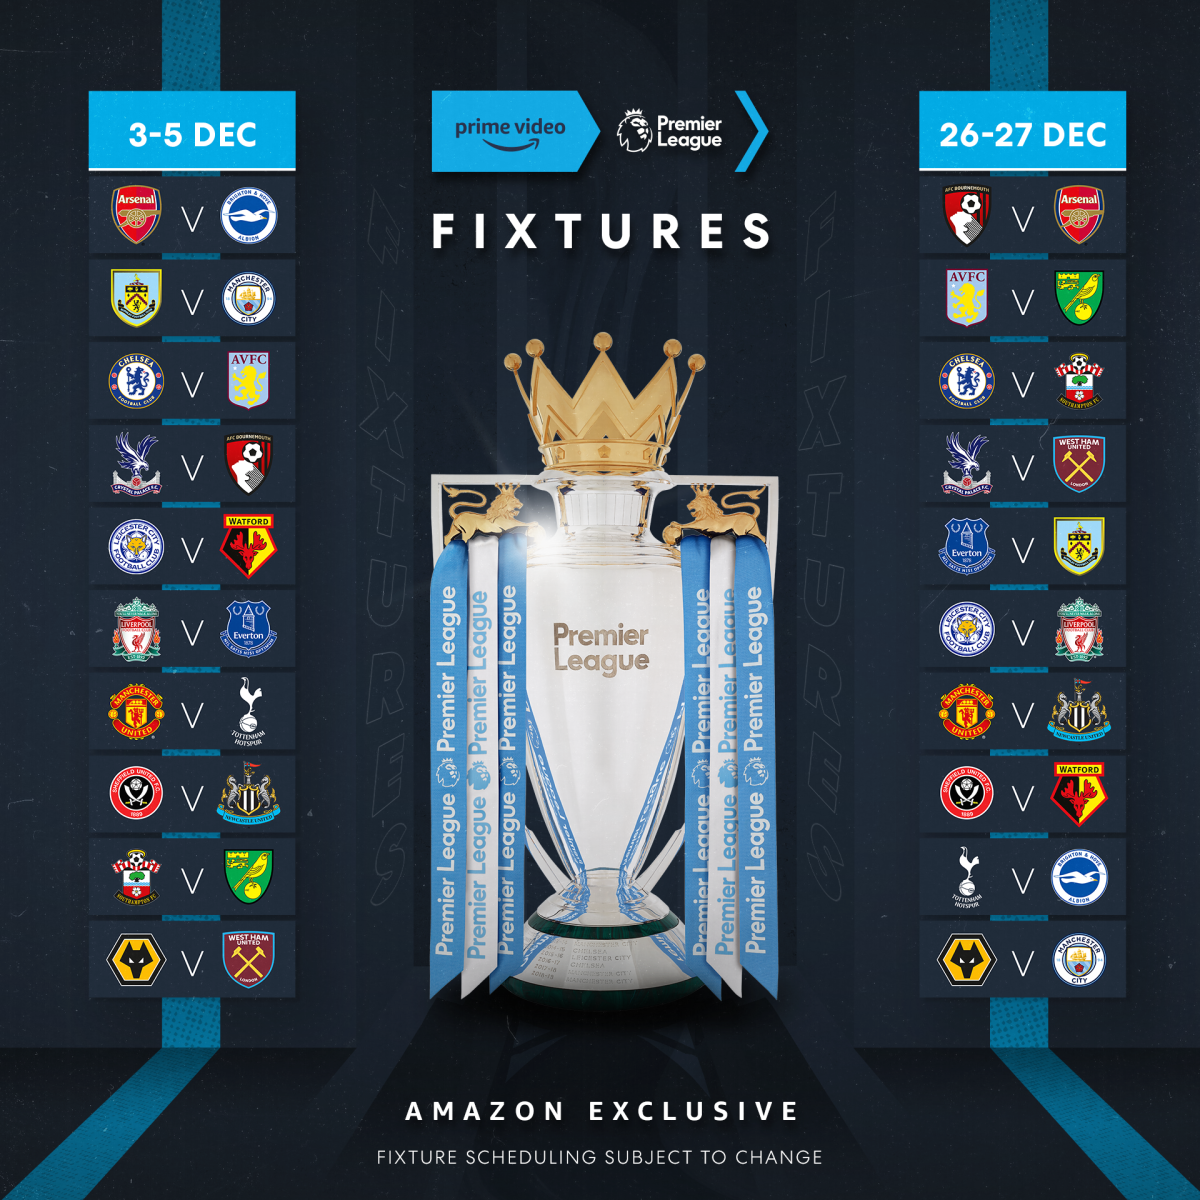 Amazon Prime announce 20 live Premier League matches over Christmas period